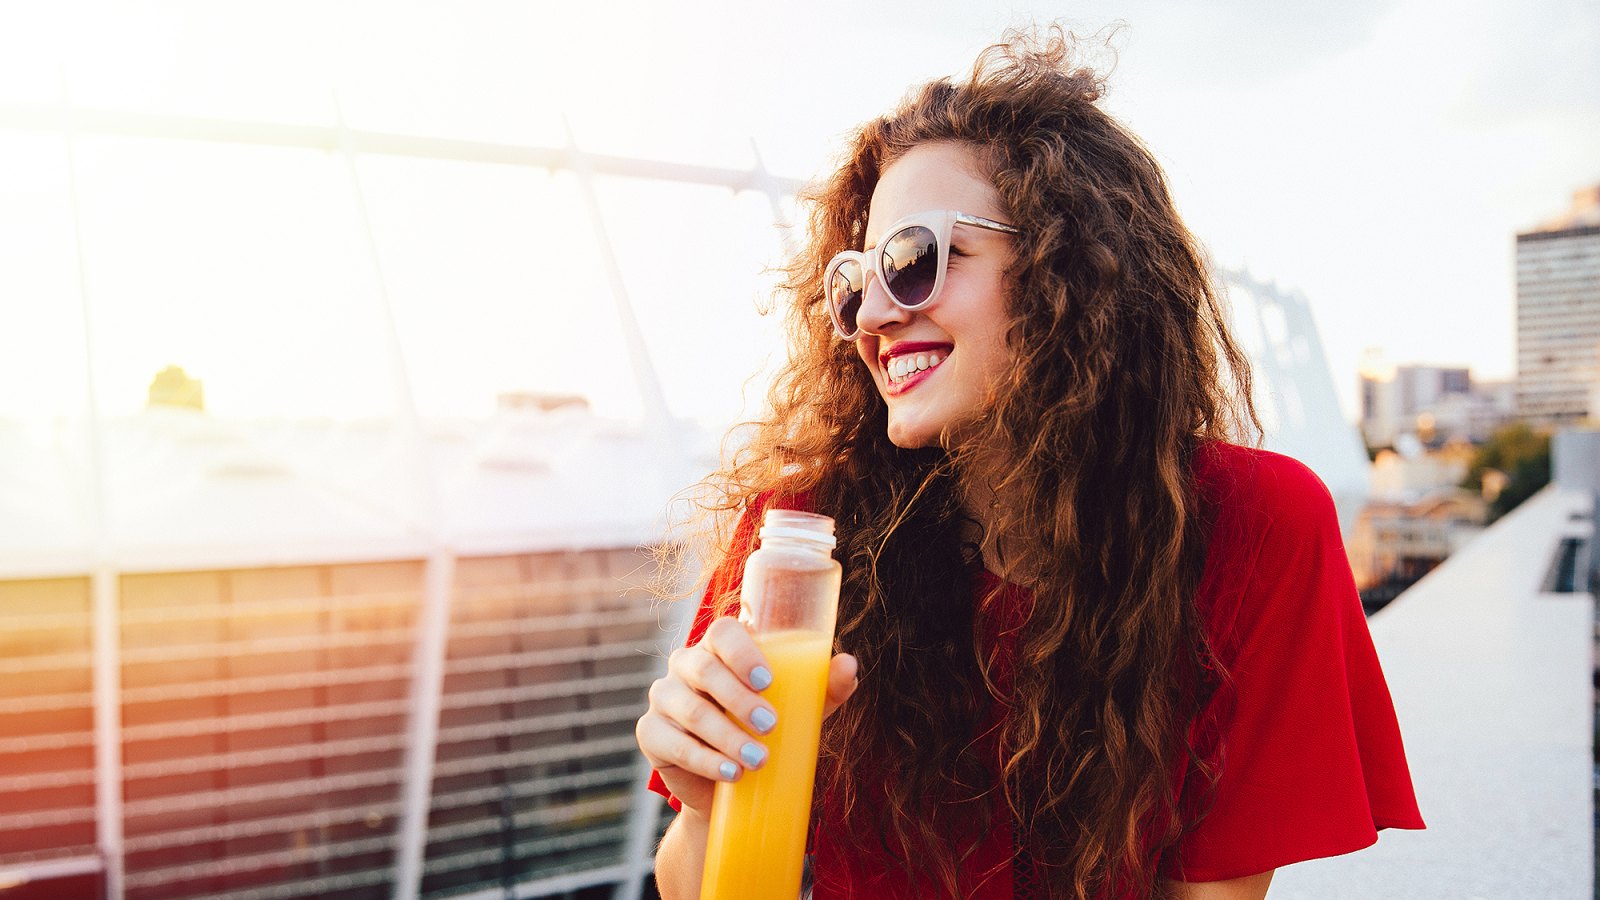 woman-drinking-orange-juice